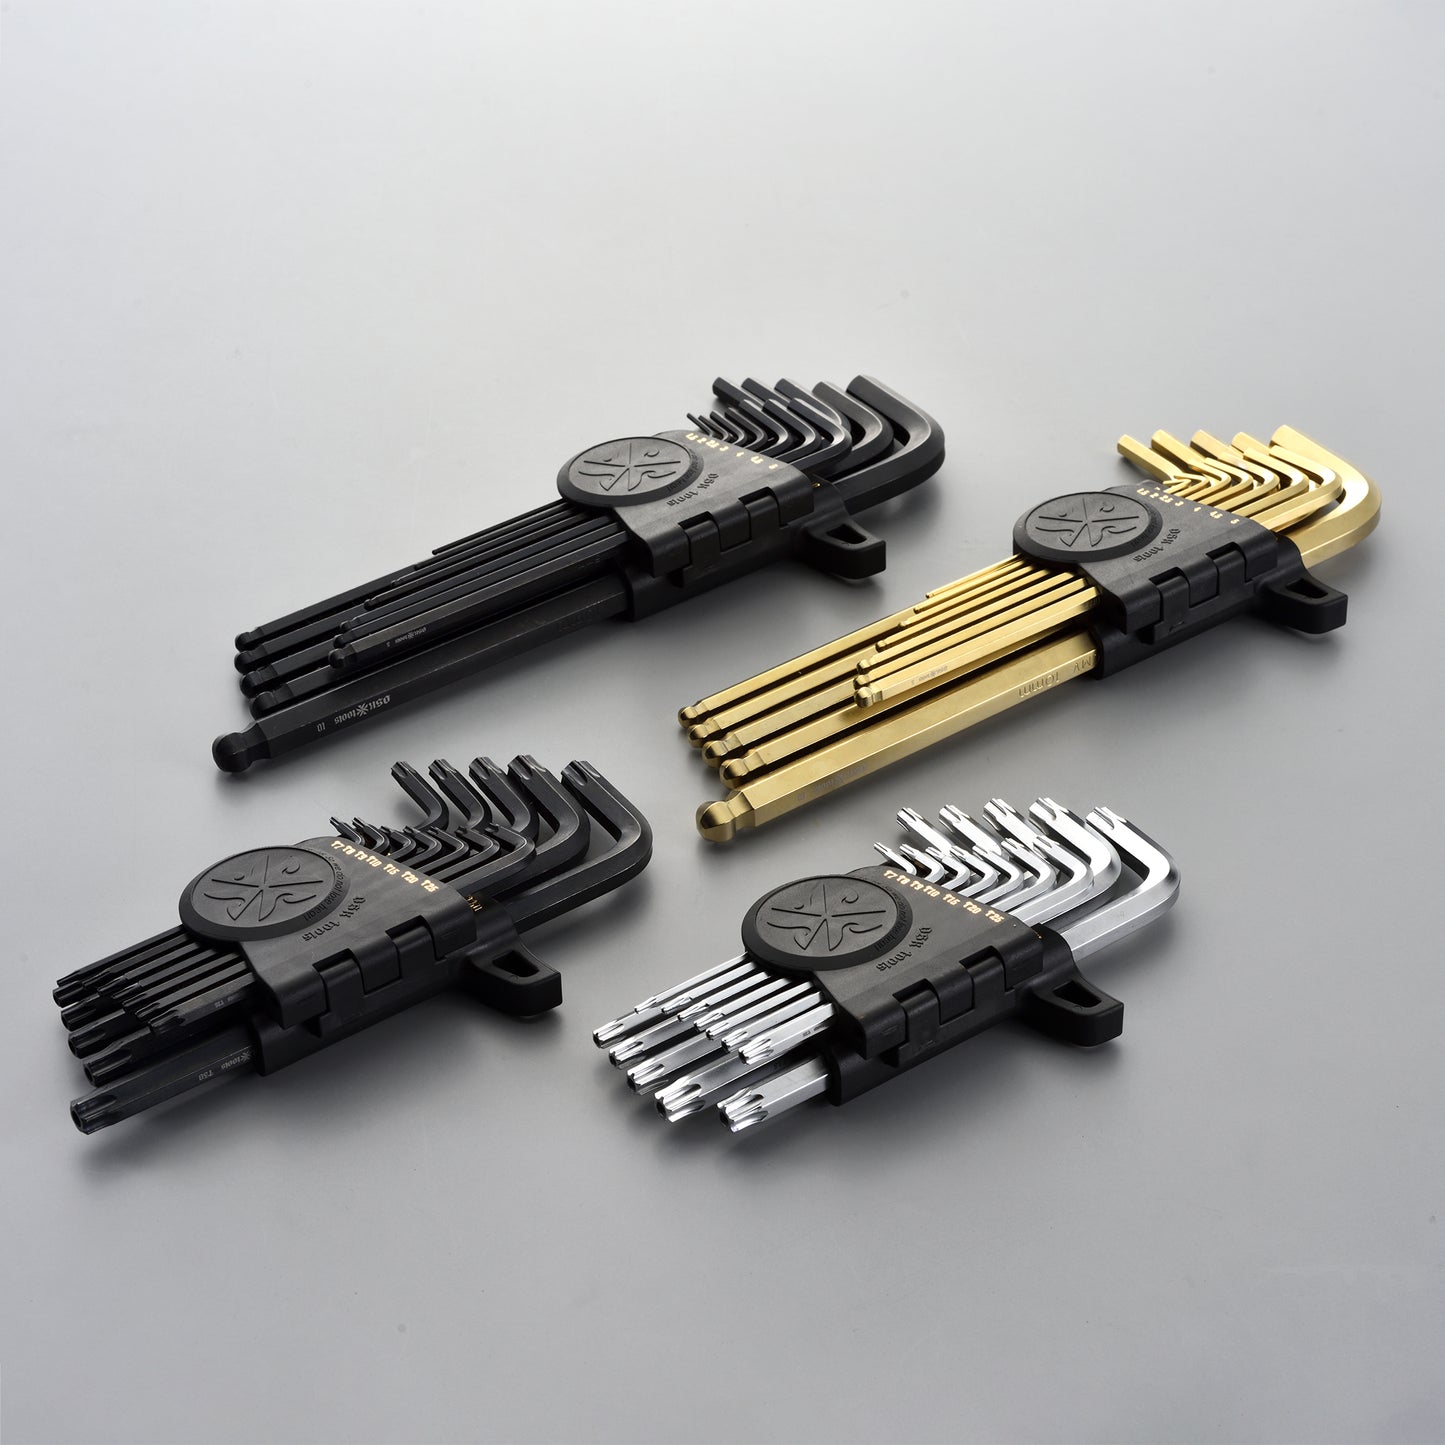 Long Arm Tamper Star Chromed Plated Hex Key Set, 12 PCS